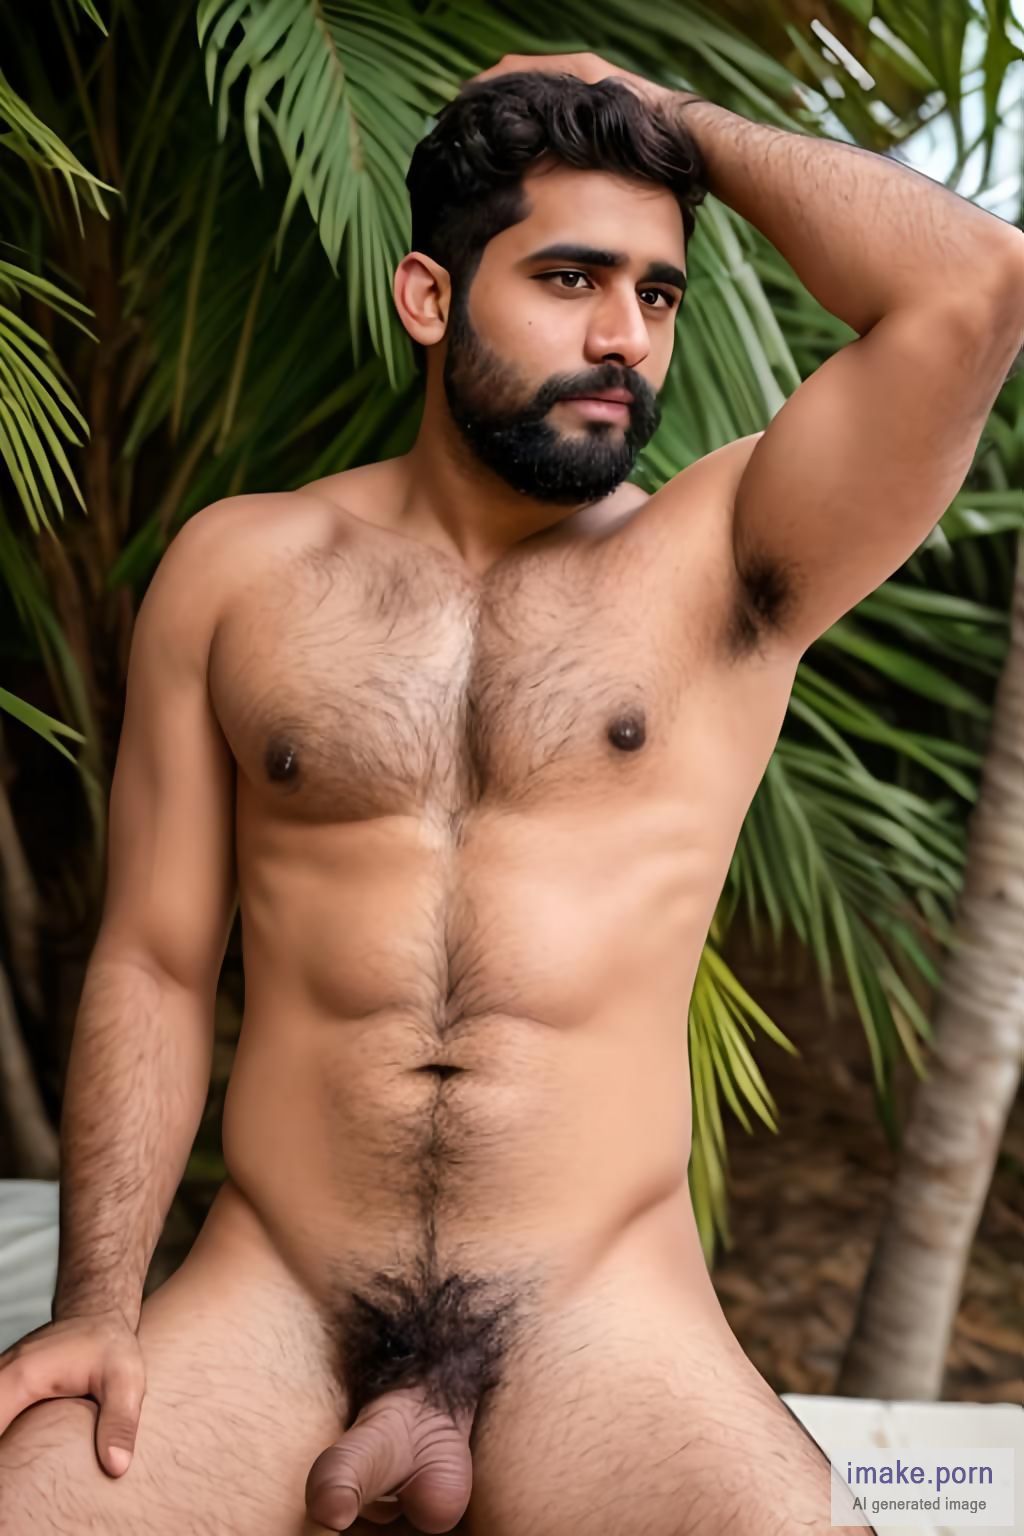 iMake.porn - Tamil man Nude 23 year old Beard Chest hair Armpit ...